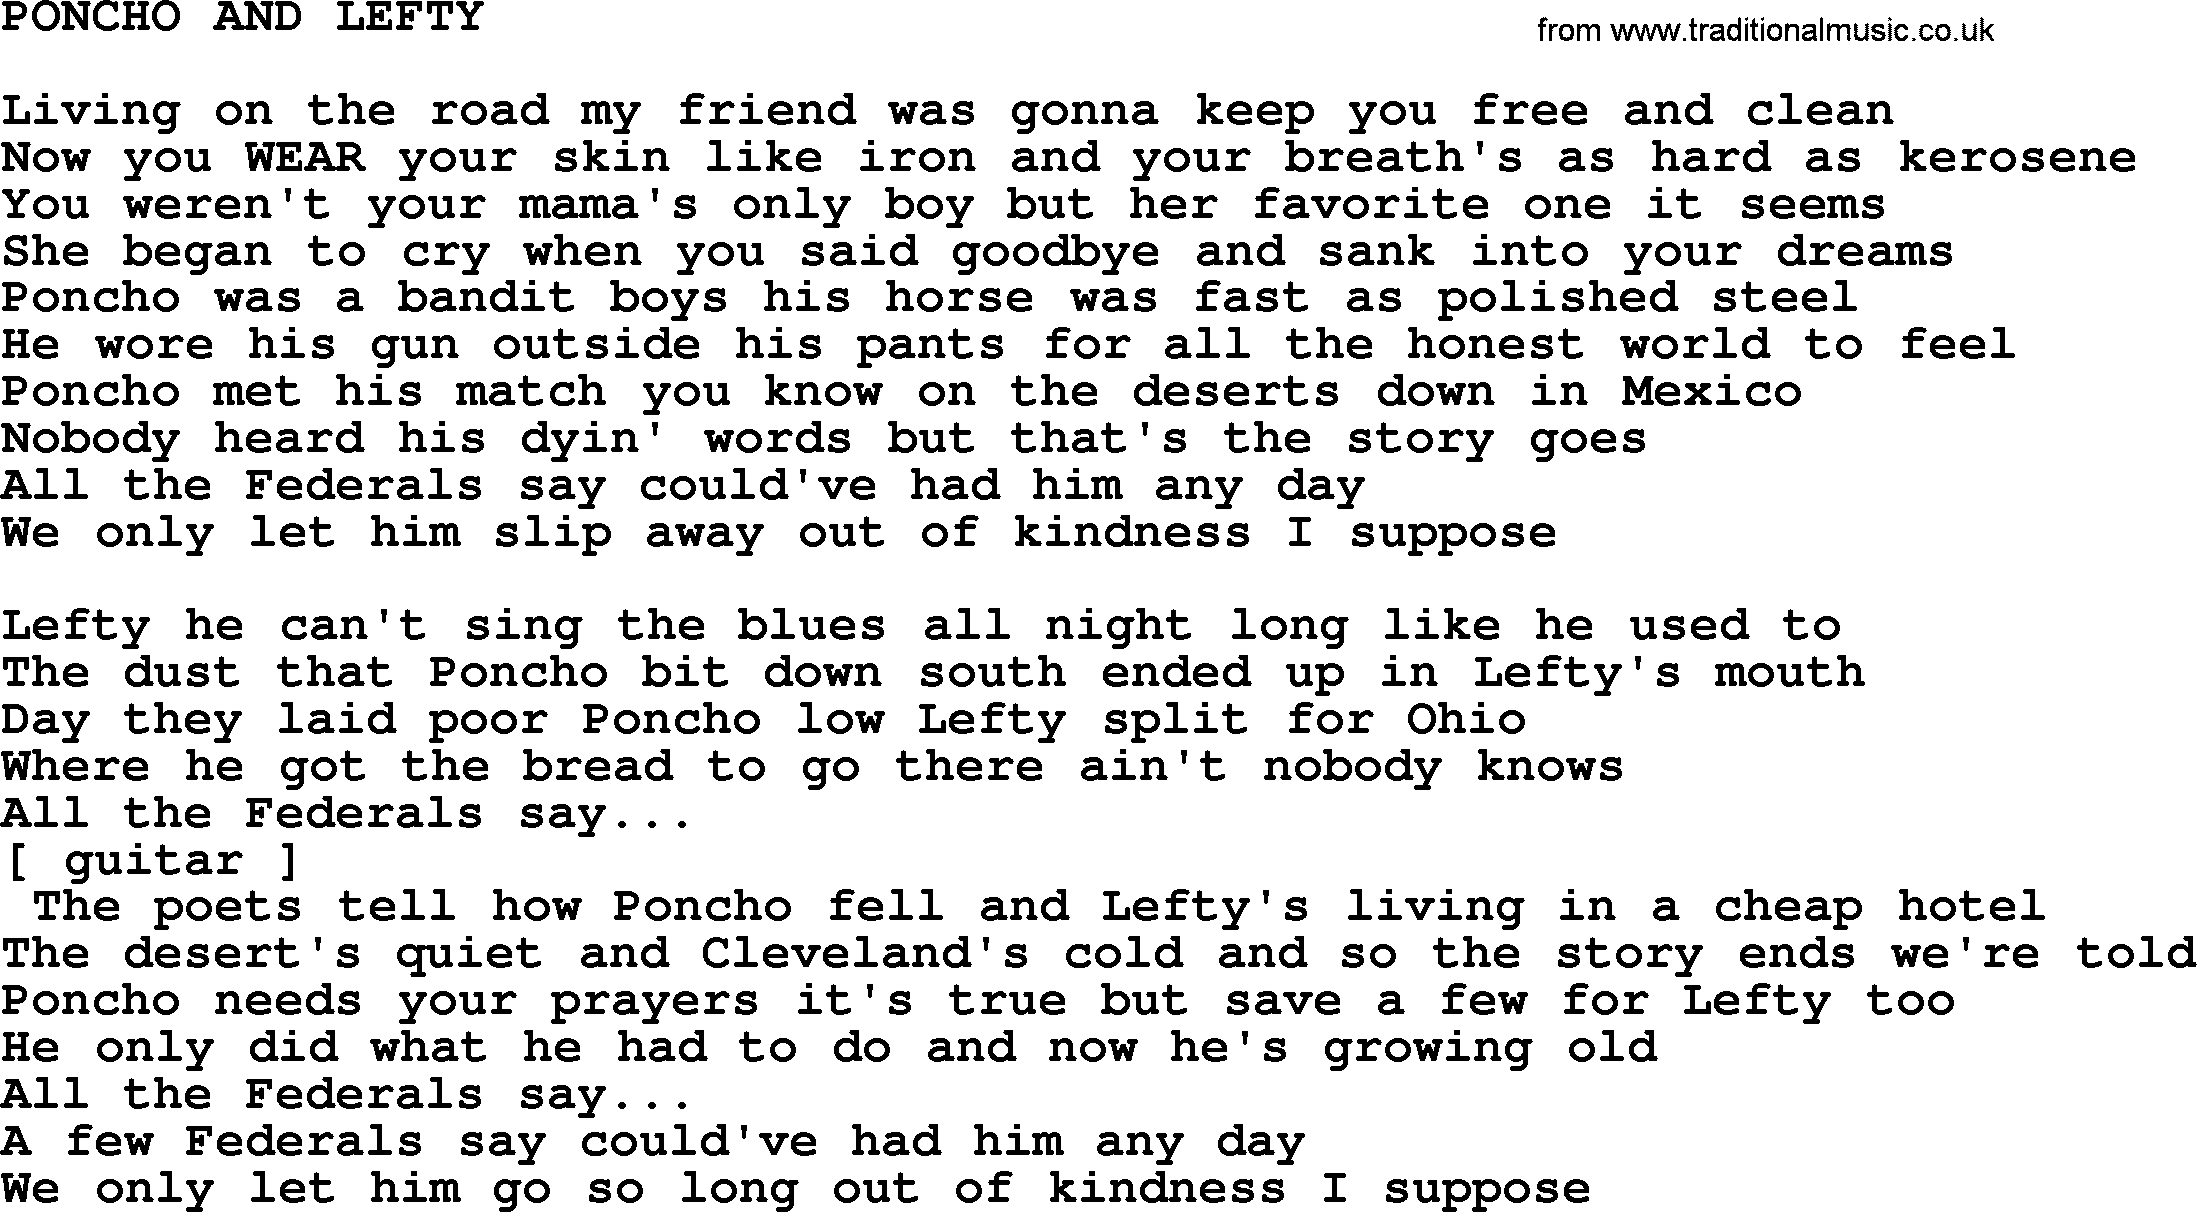 Merle Haggard song: Poncho And Lefty, lyrics.